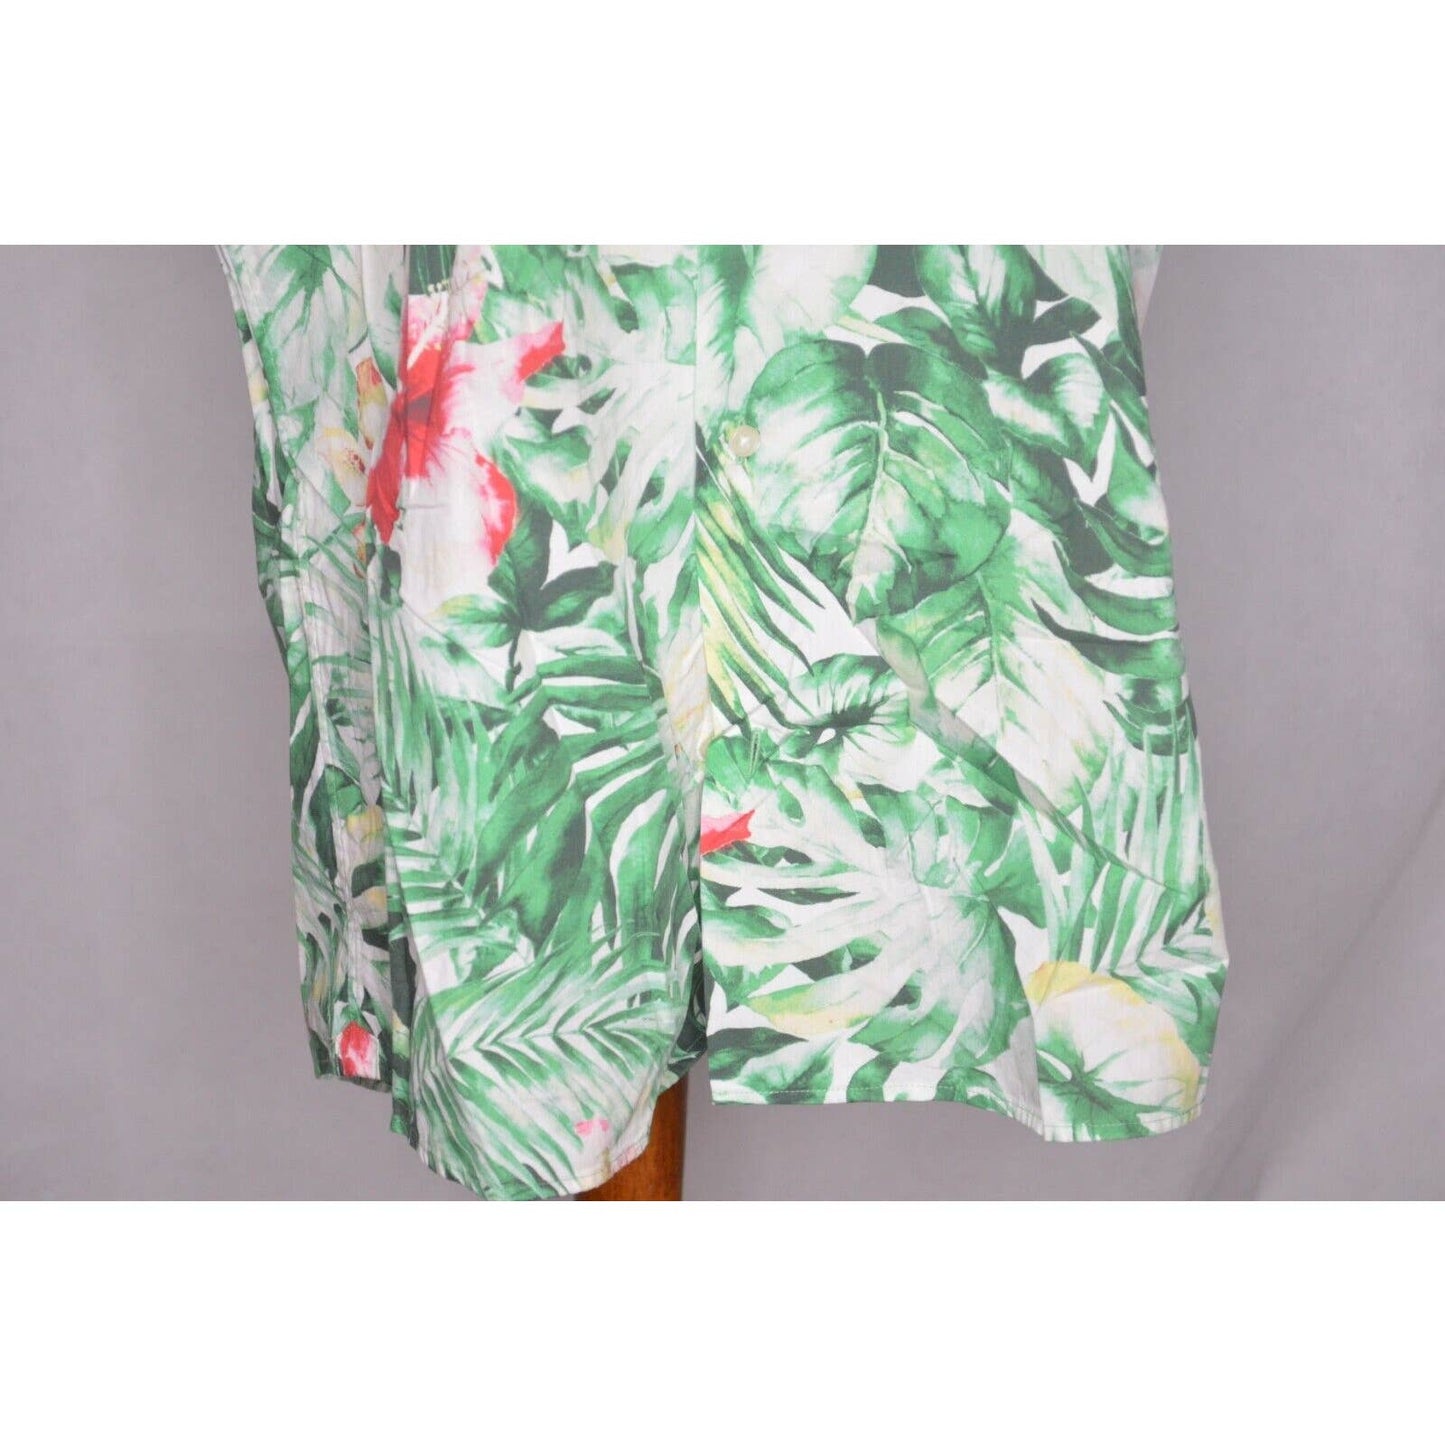 MICHAEL KORS, Men's Green & White Hawaiian Button Down Shirt, Size XL, NWT, $98